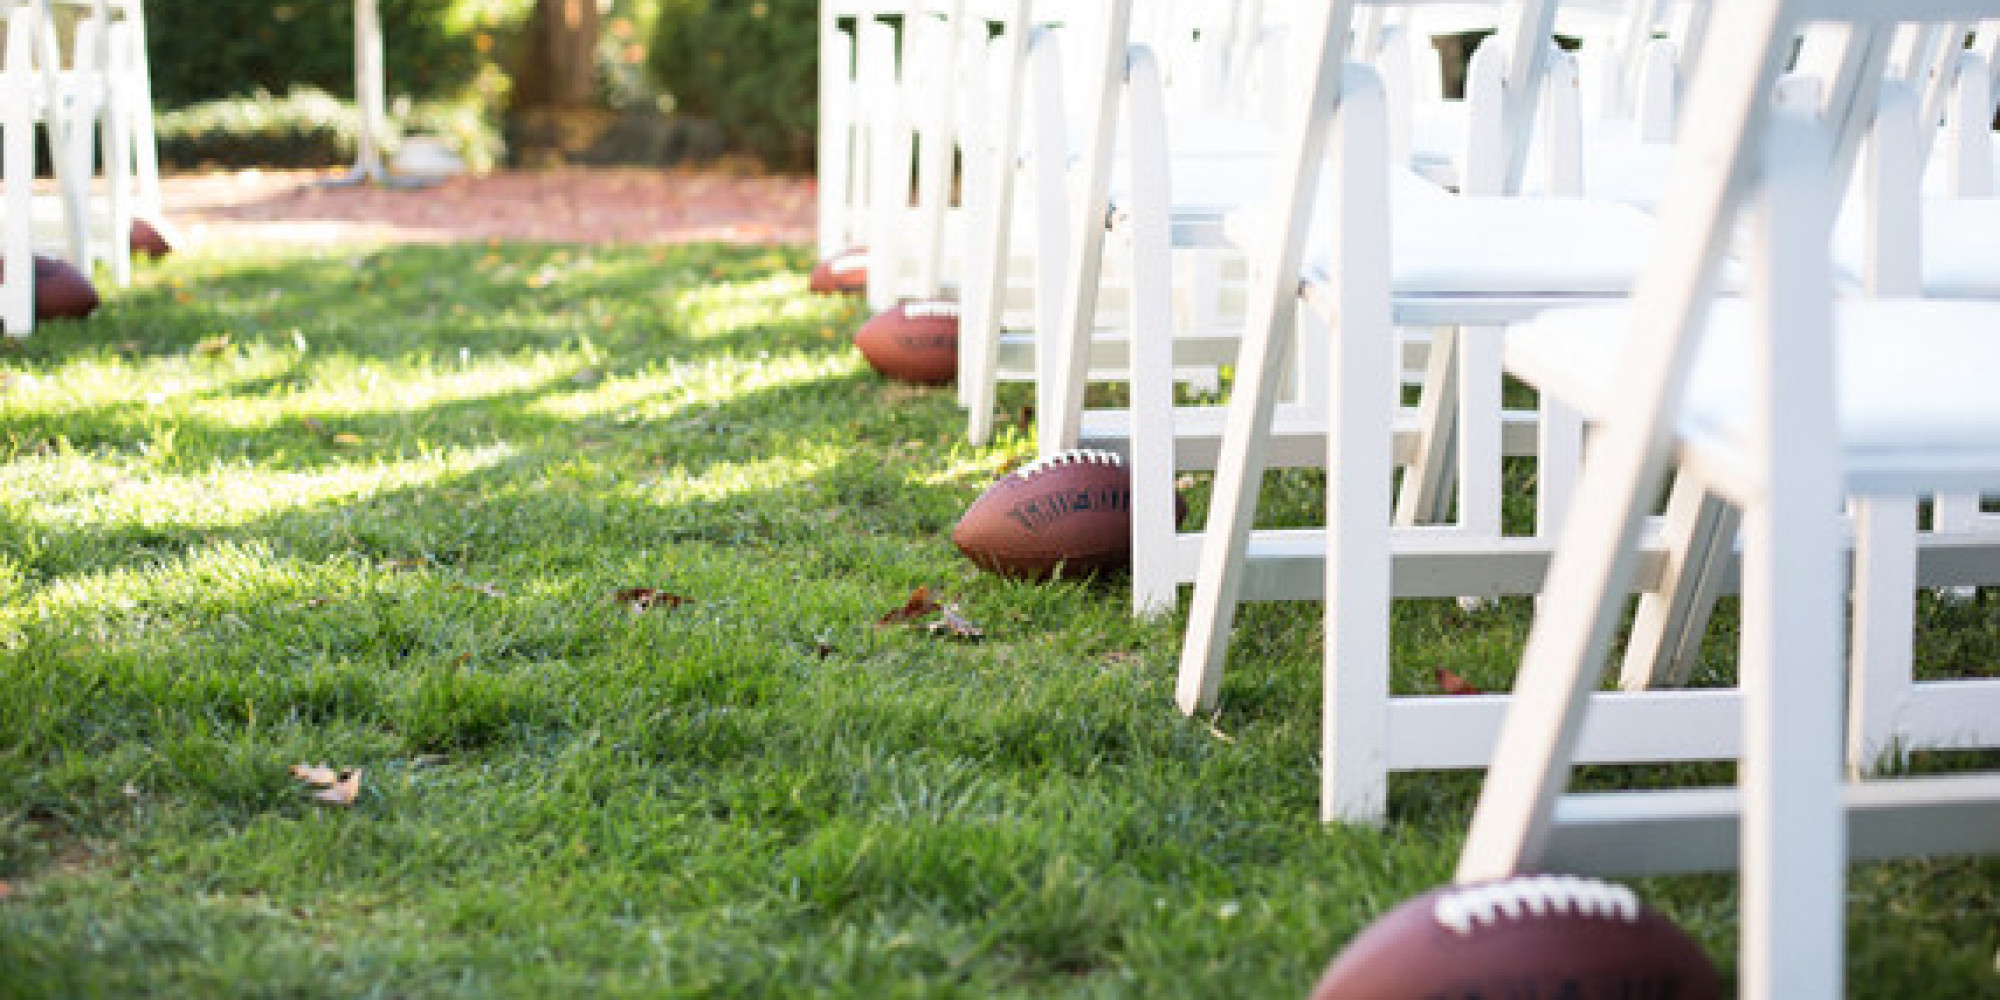 Super Bowl weddings: Touchdown or fumble?